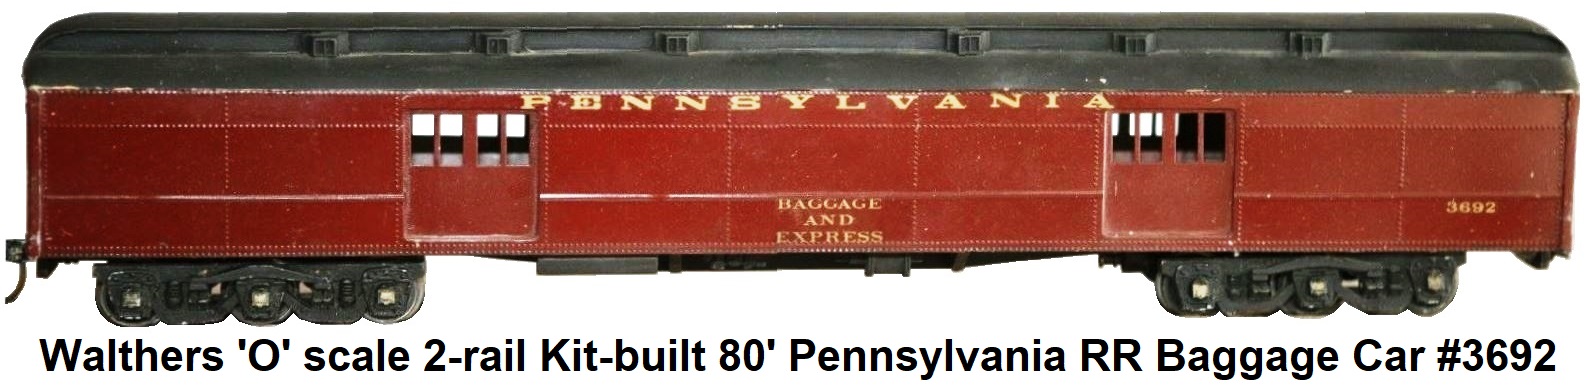 Walthers 'O' Scale 80' 2-rail Kit-built Pennsylvania RR Baggage Car